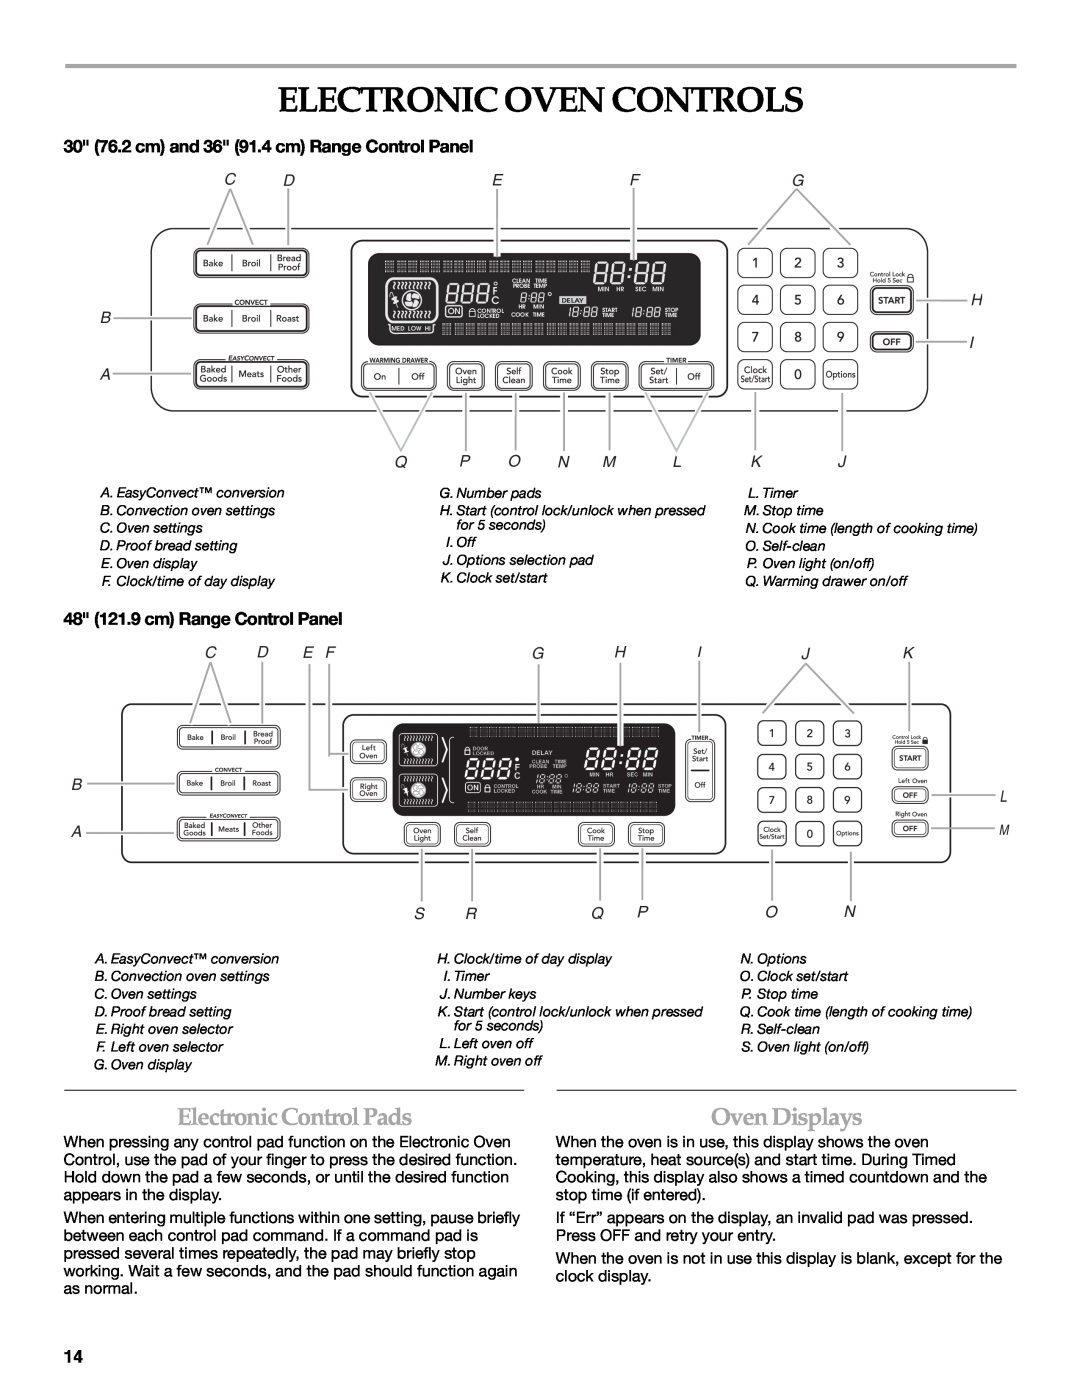 KitchenAid KDRS462 Electronic Oven Controls, ElectronicControlPads, OvenDisplays, 48 121.9 cm Range Control Panel, C D B A 